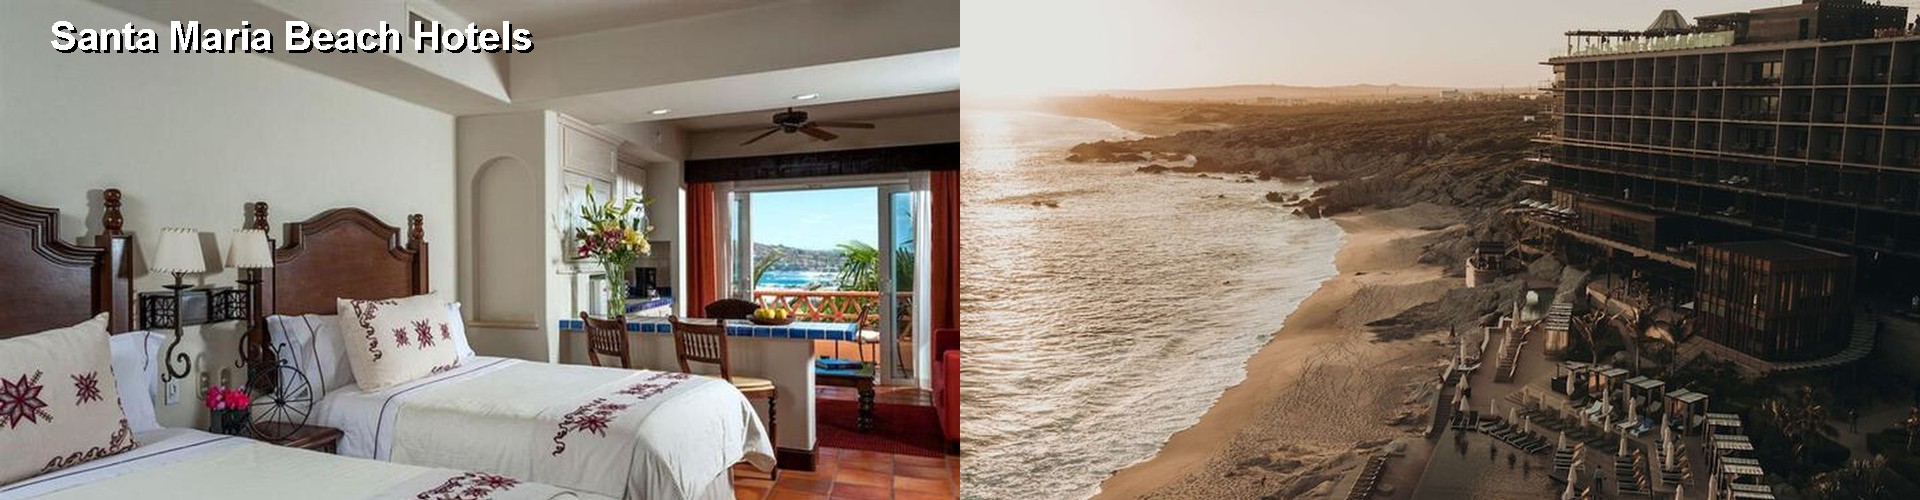 5 Best Hotels near Santa Maria Beach